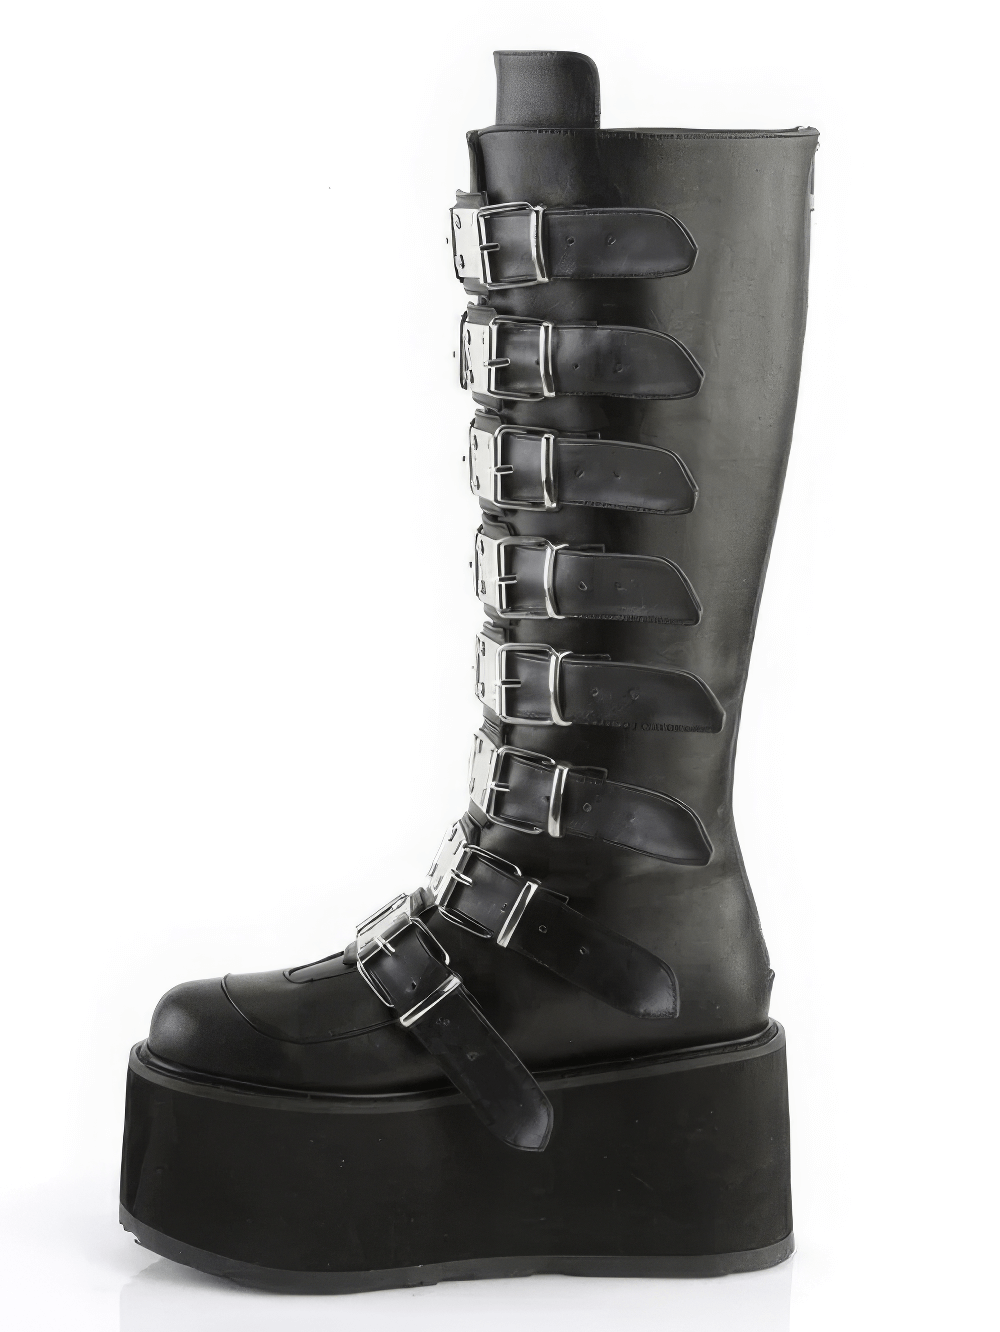 DEMONIA Black Knee High Platform Boots with Buckle Straps